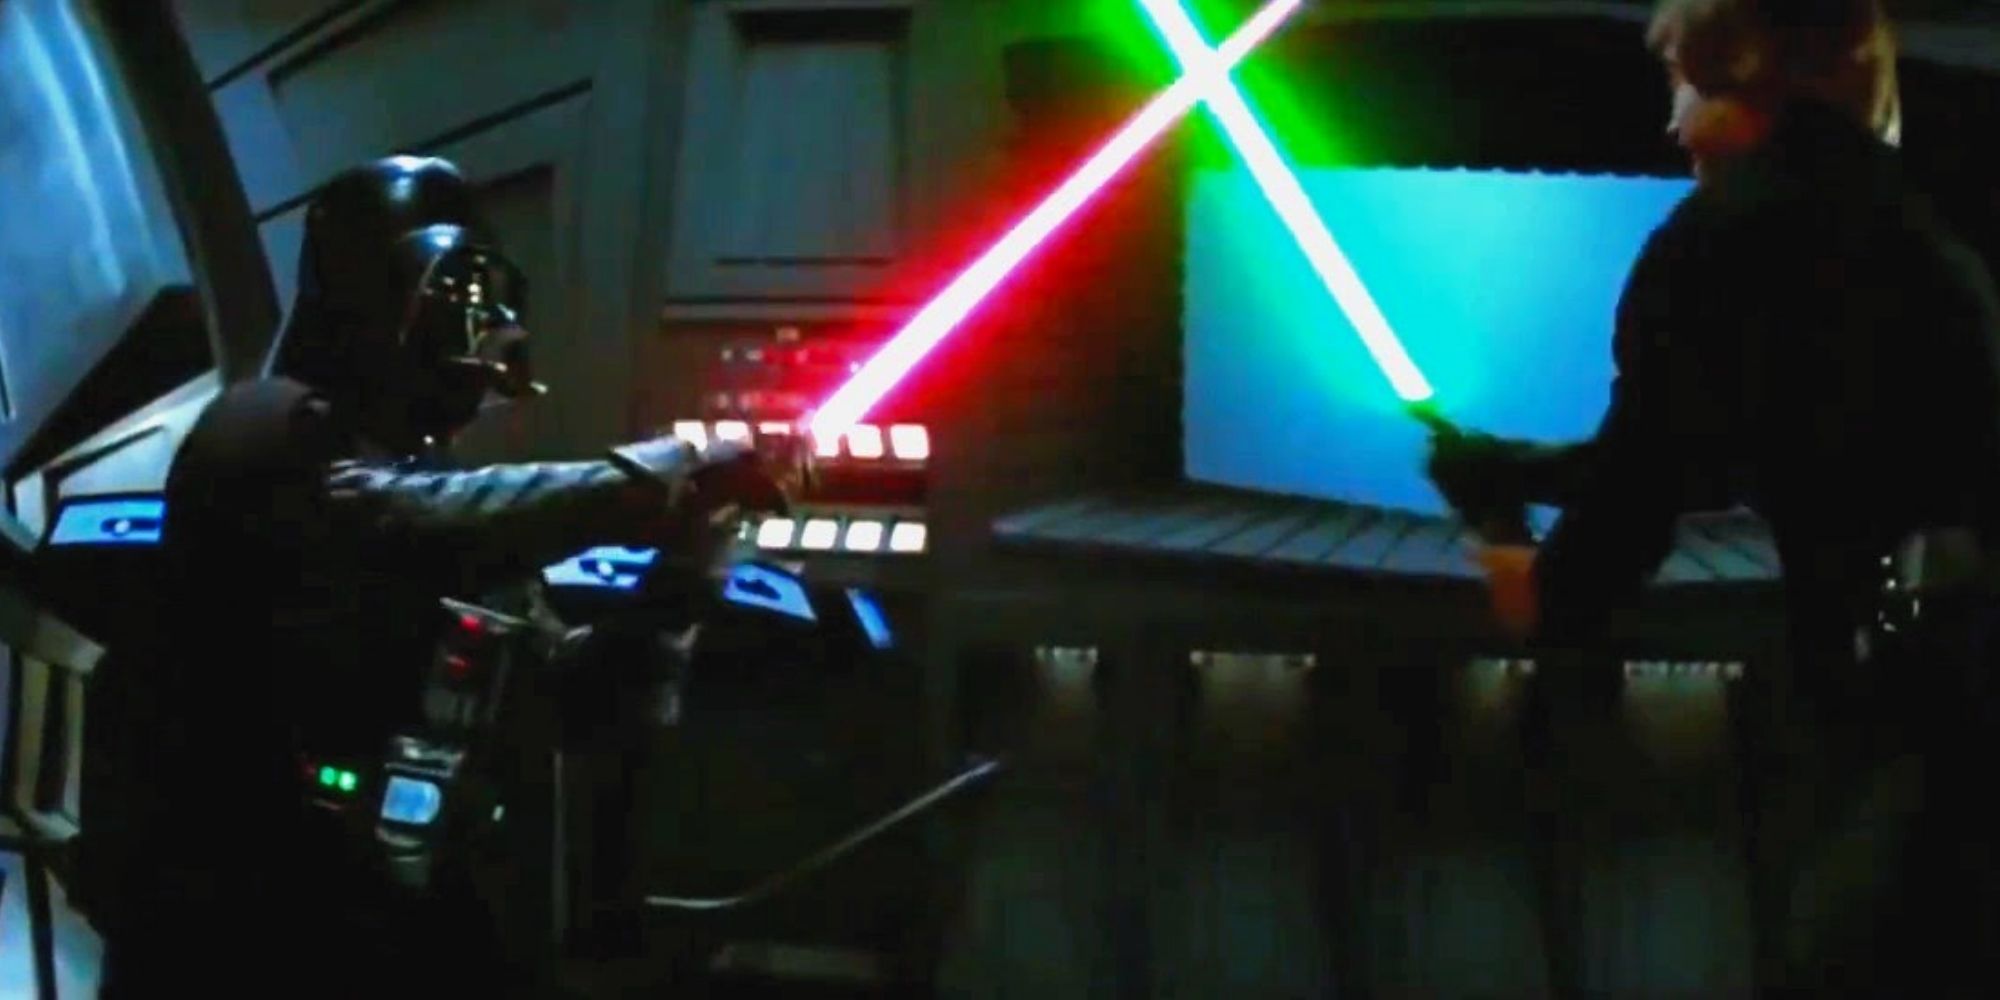 Luke Skywalker and Darth Vader duel on the Death Star in 'Star Wars: Episode VI - The Return of the Jedi'